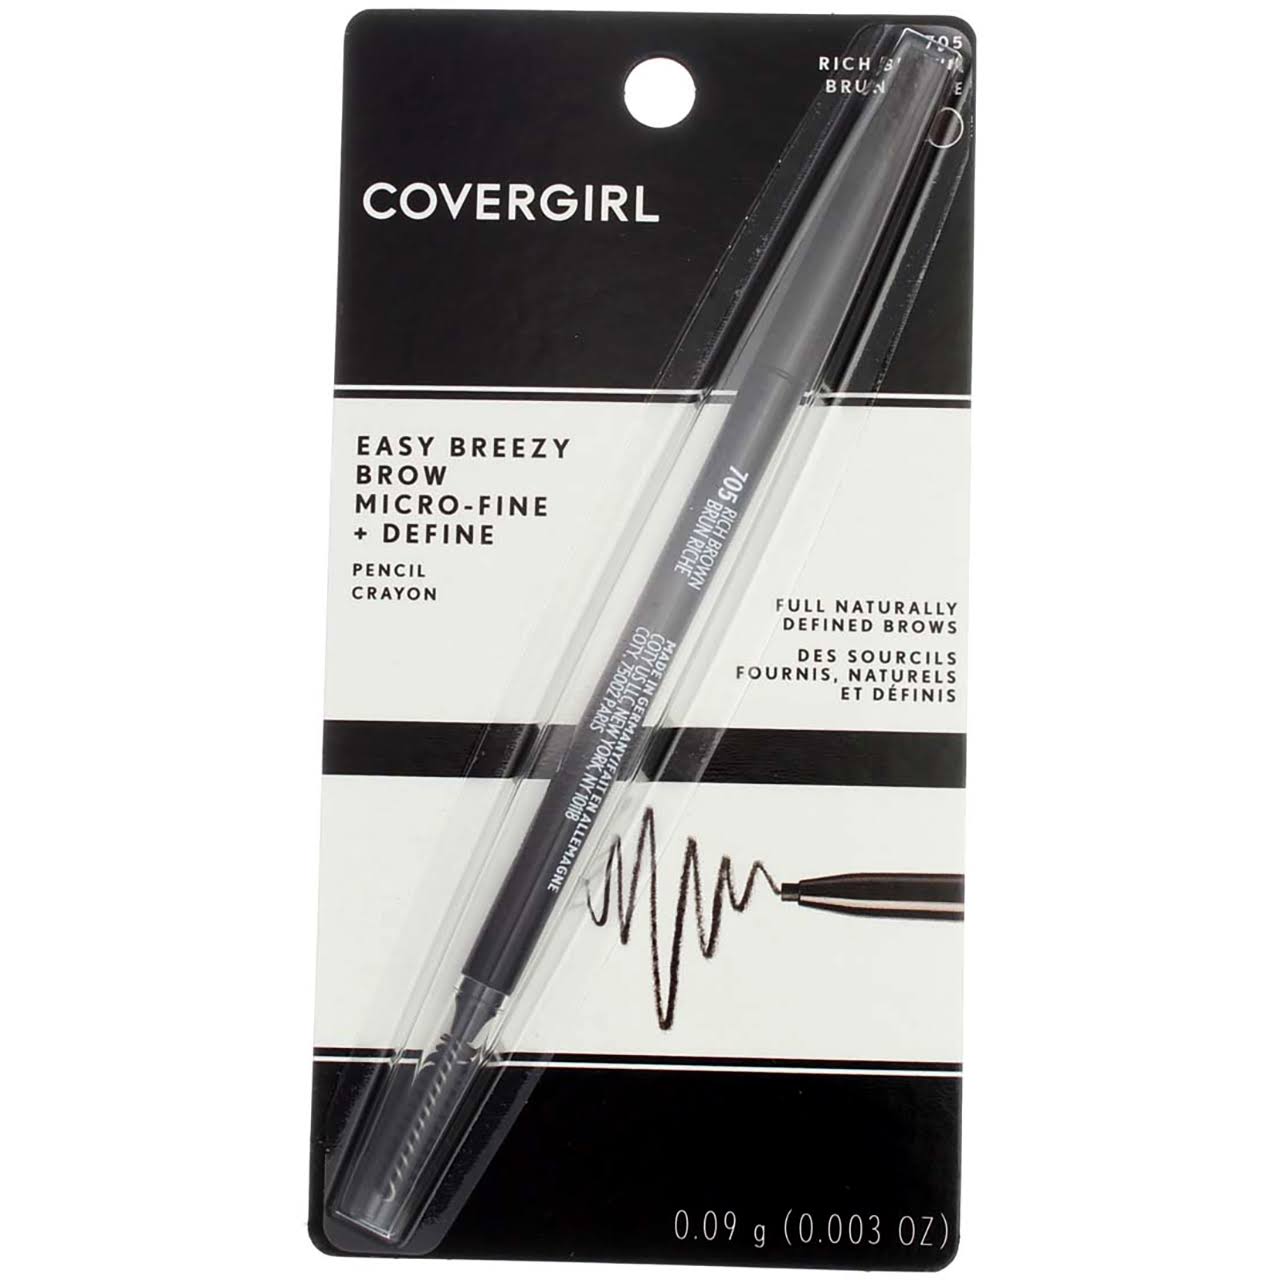 Covergirl Easy Breezy Brow Micro-fine & Define Pencil - Rich Brown, 0.09g